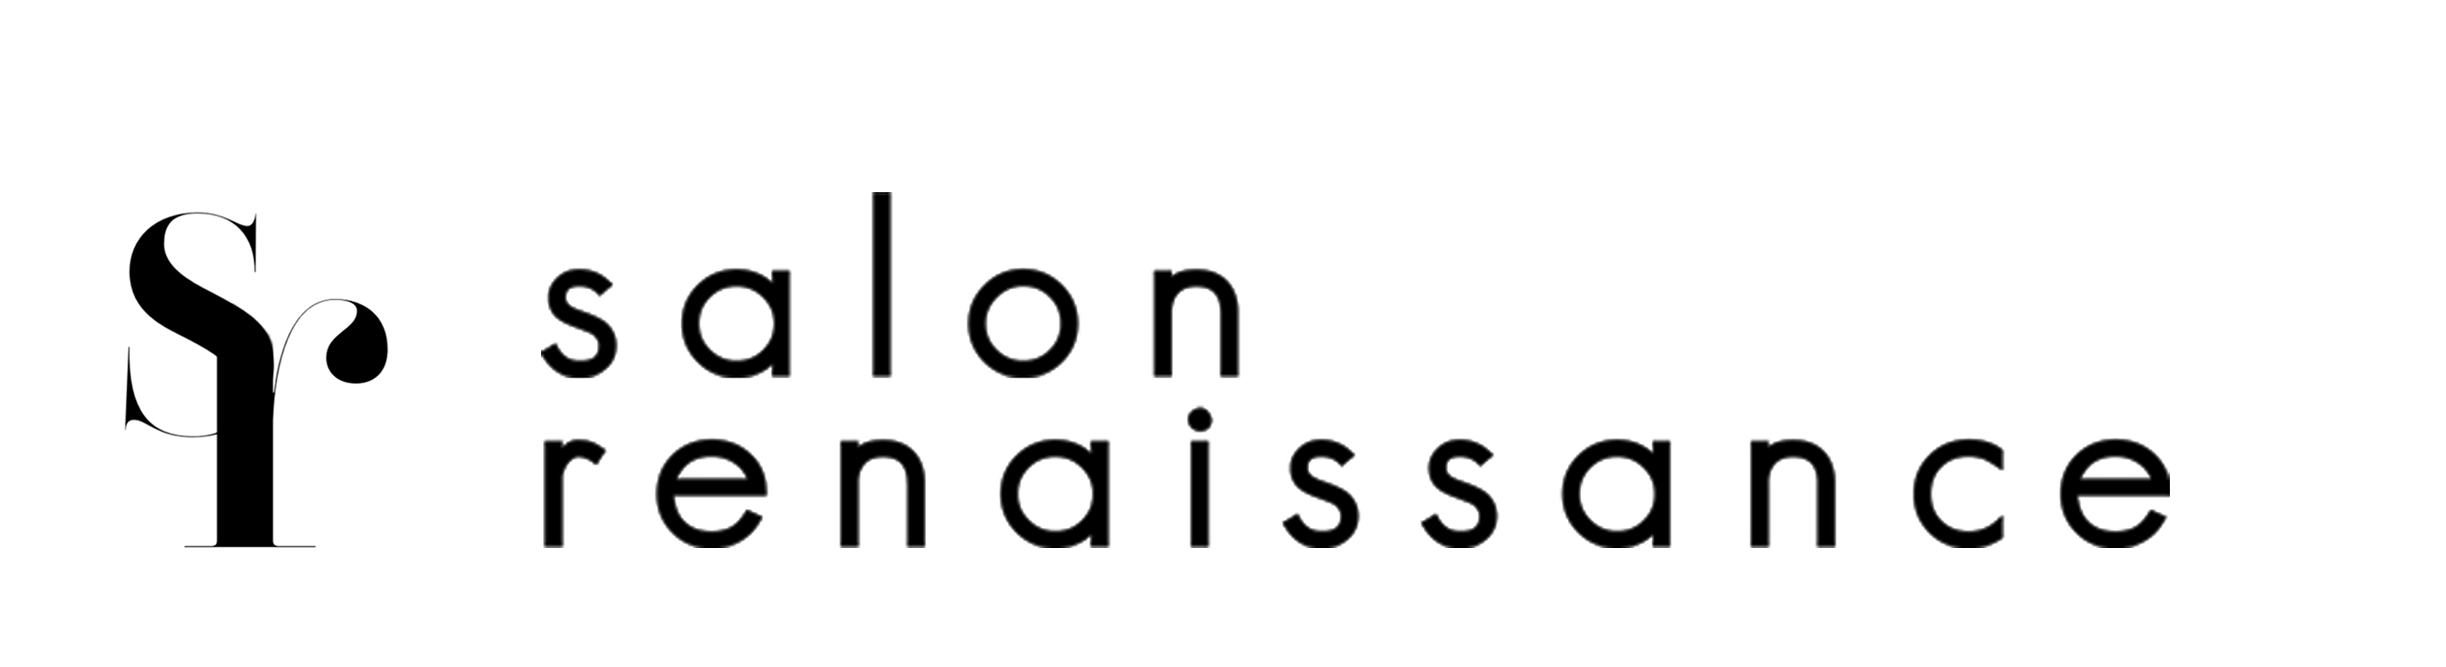 Salon Renaissance Logo